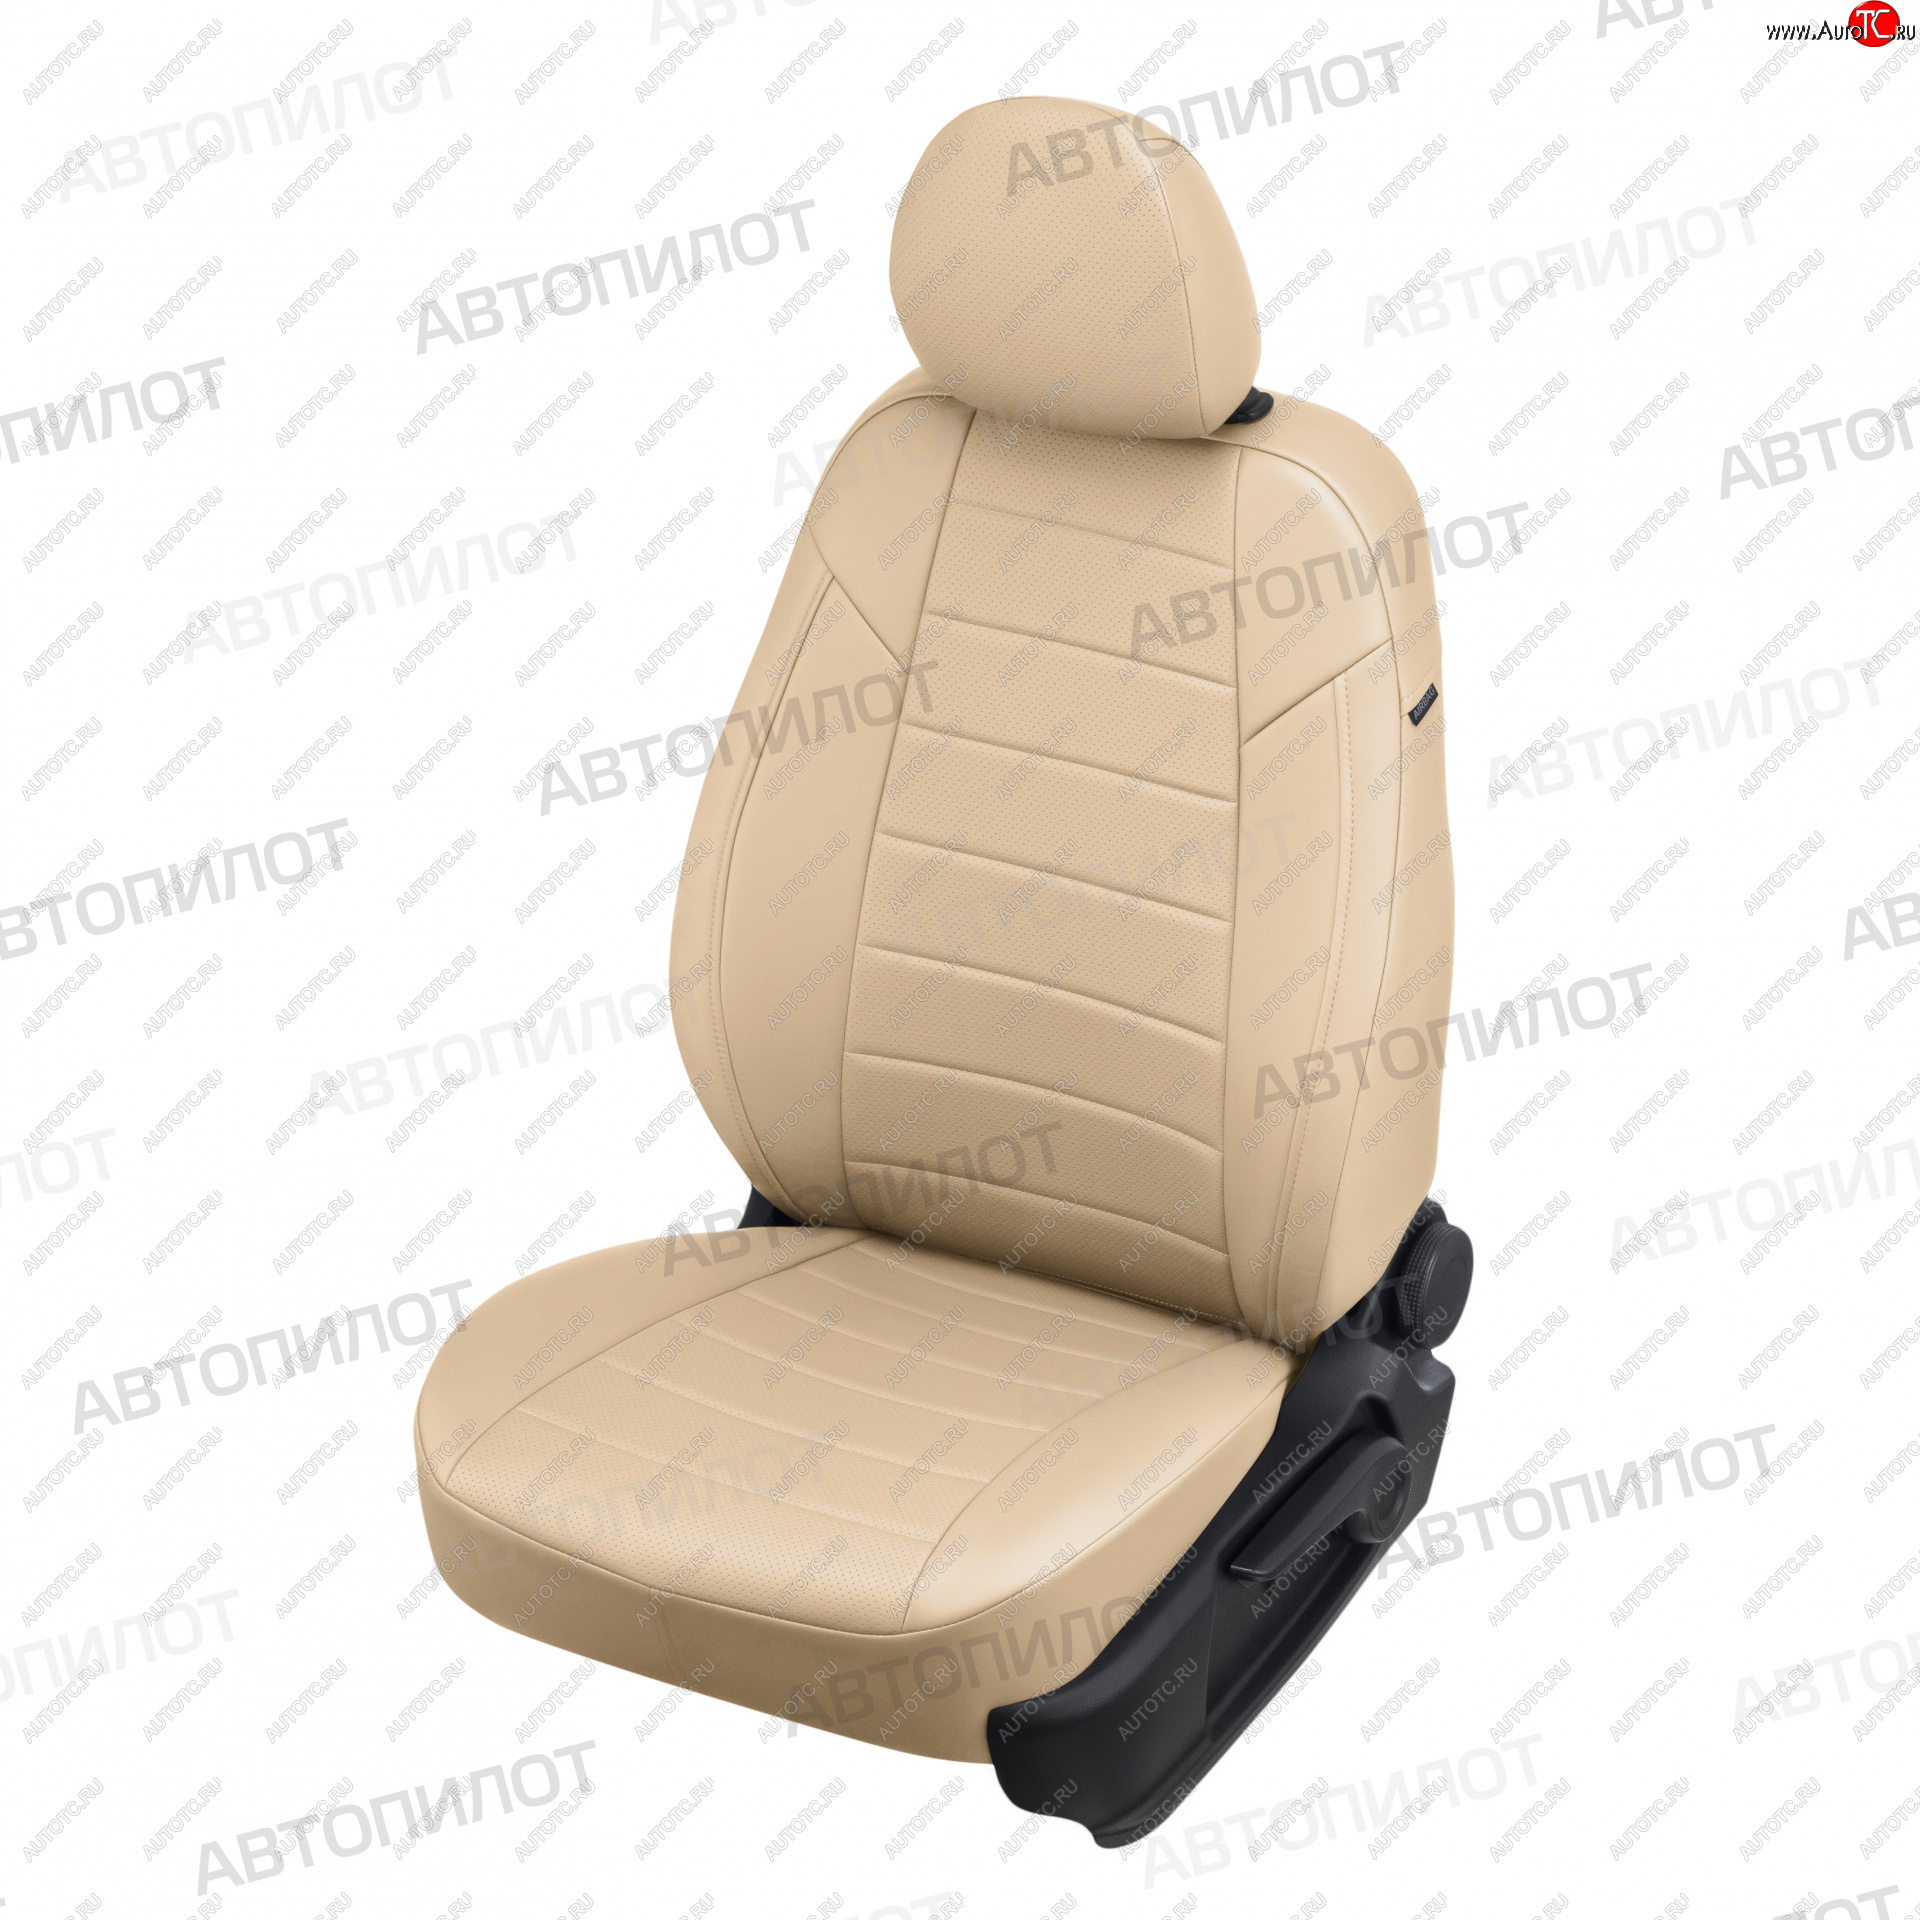 13 449 р. Чехлы сидений (5 мест, экокожа) Автопилот  Ford Galaxy  2 (2006-2015) (бежевый)